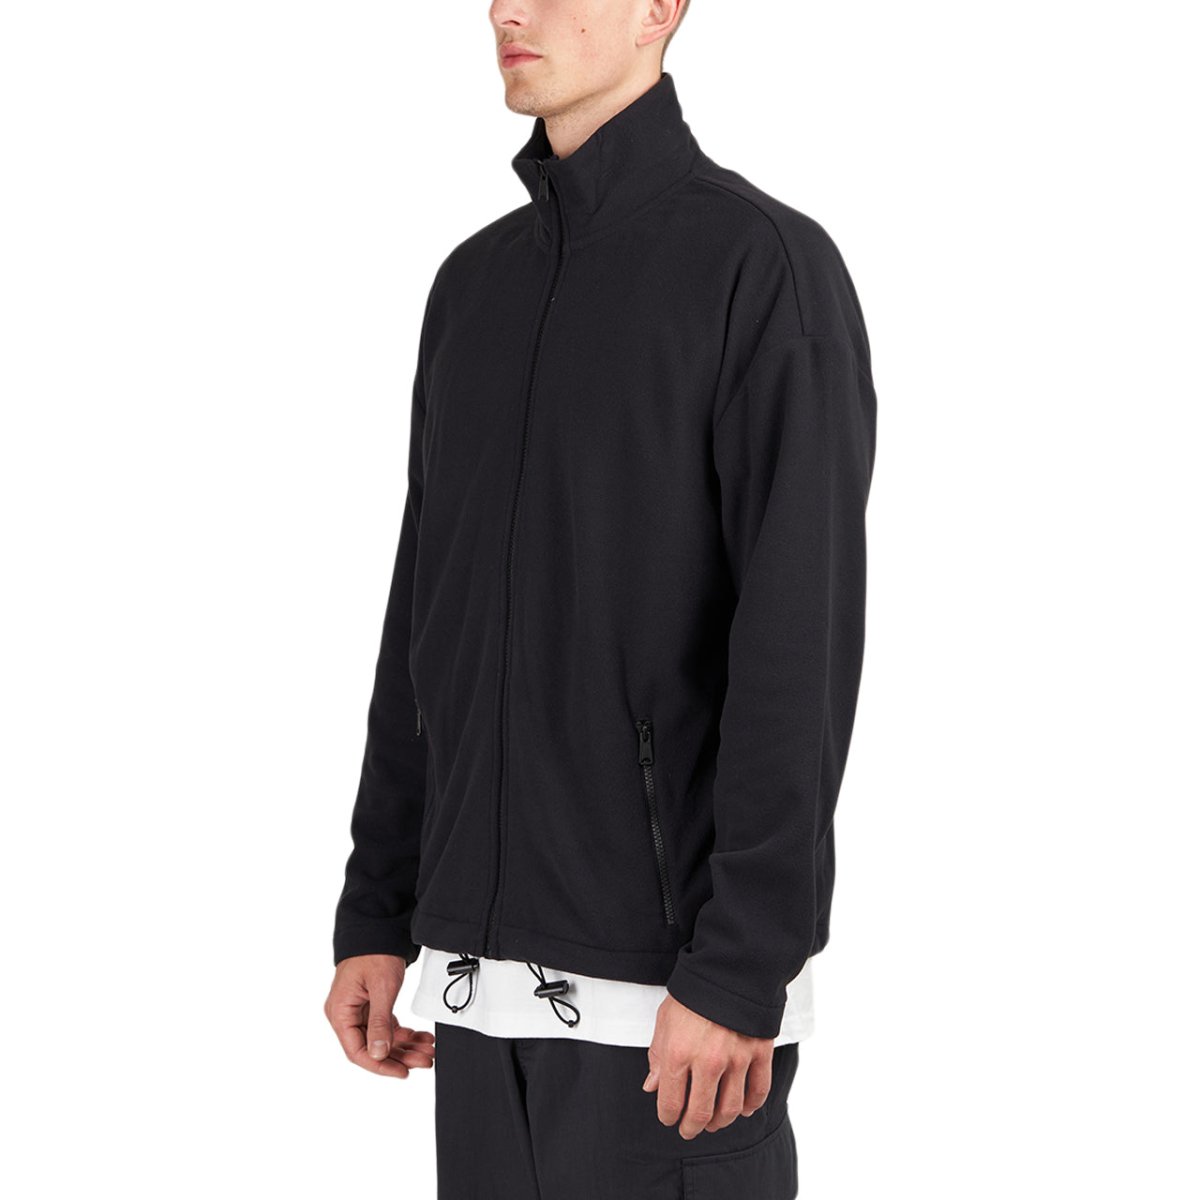 Napapijri x Patta FZ Fleece Jacket (Schwarz)  - Allike Store